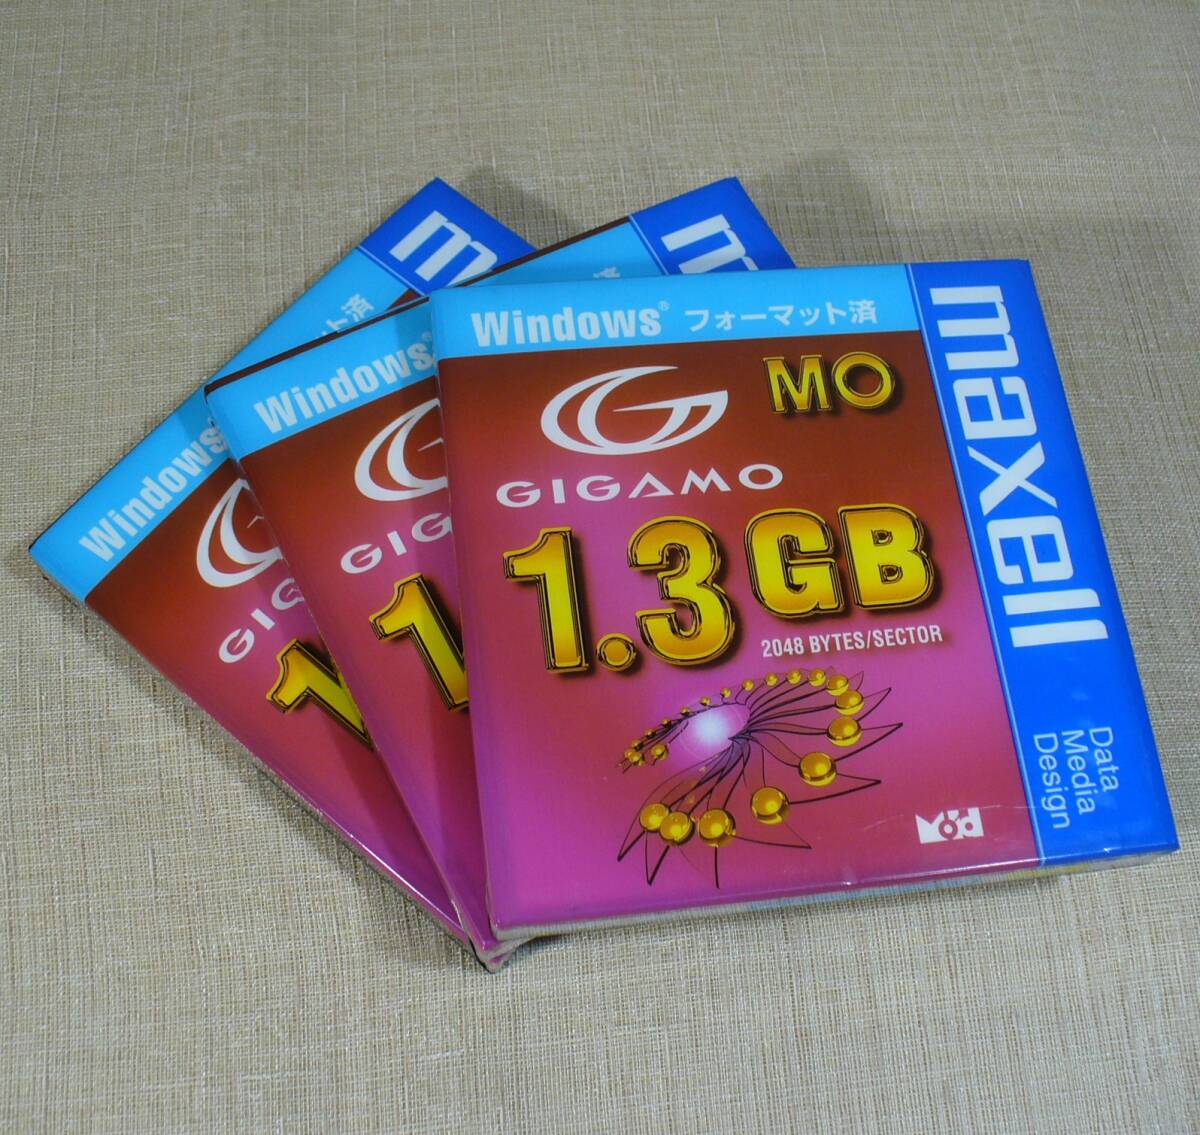 maxell MA-M1300WIN.B1P GIGAMO MO диск 1.3GB Windows формат settled 3 шт. комплект нераспечатанный товар!